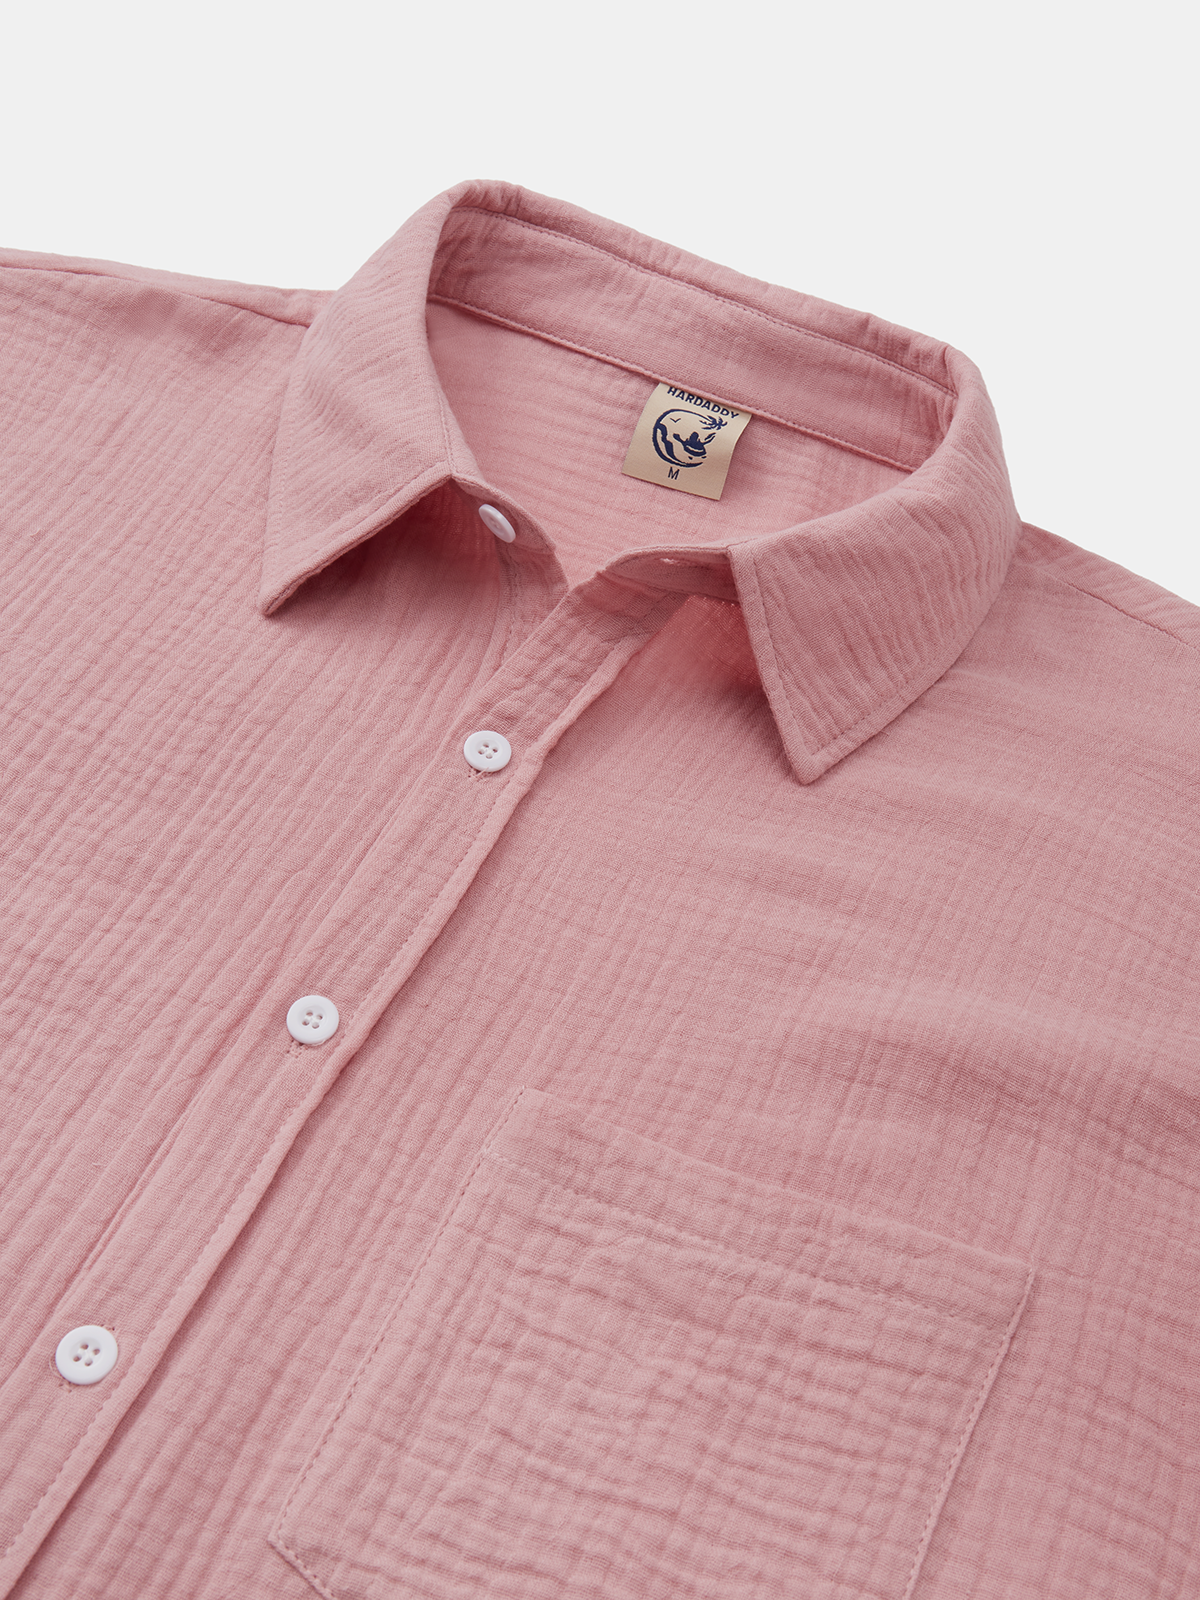 Hardaddy Cotton Plain Chest Pocket Long Sleeve Casual Shirt